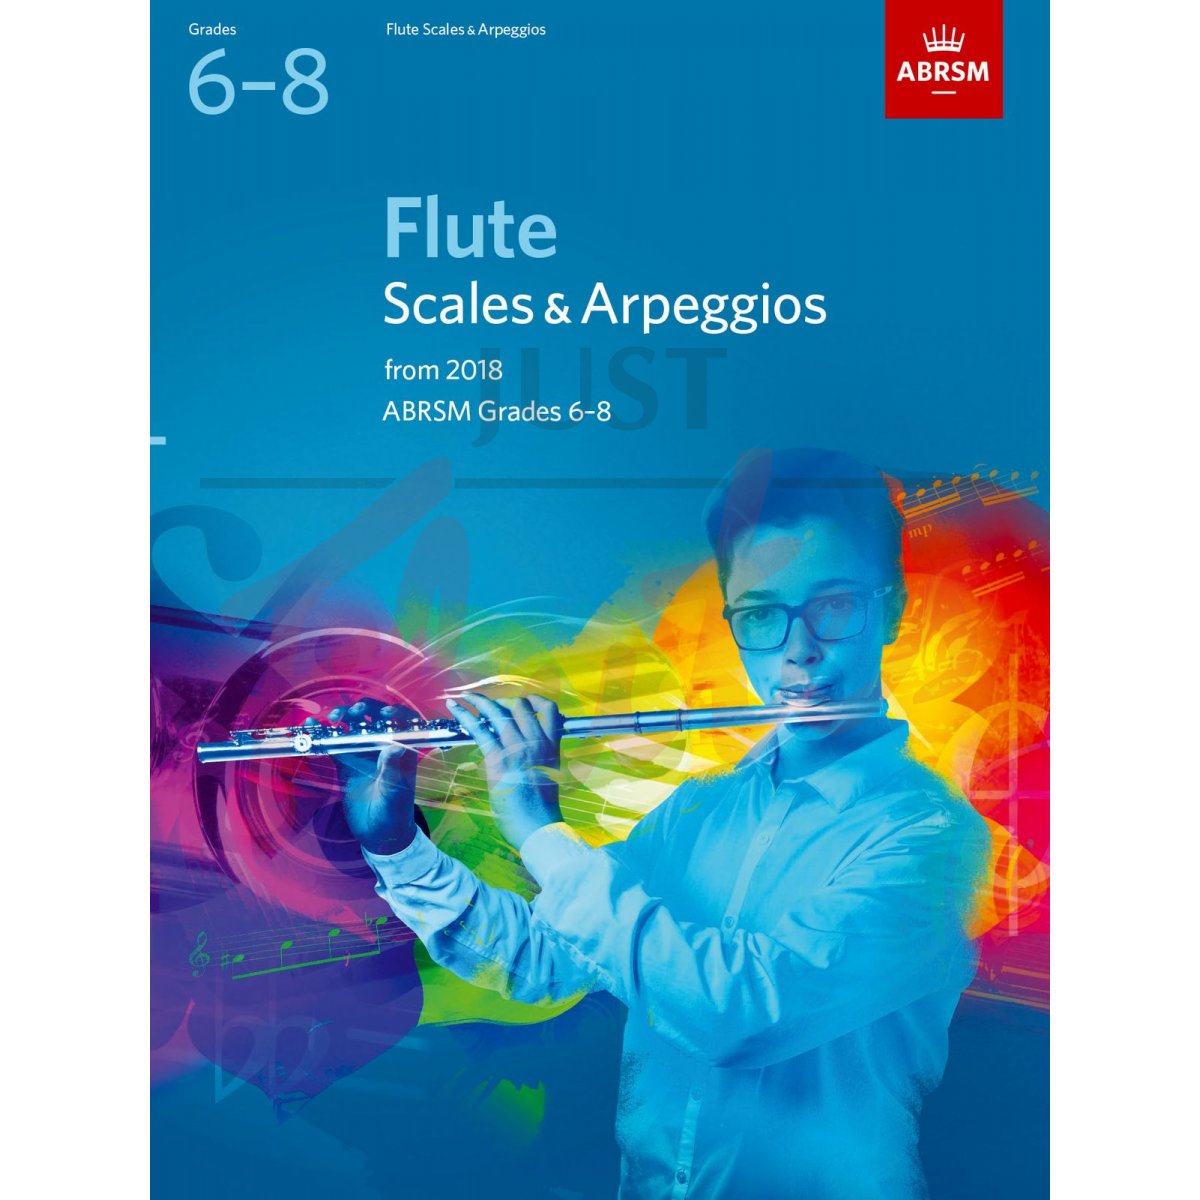 Scales &amp; Arpeggios Grades 6-8 (from 2018) [Flute]